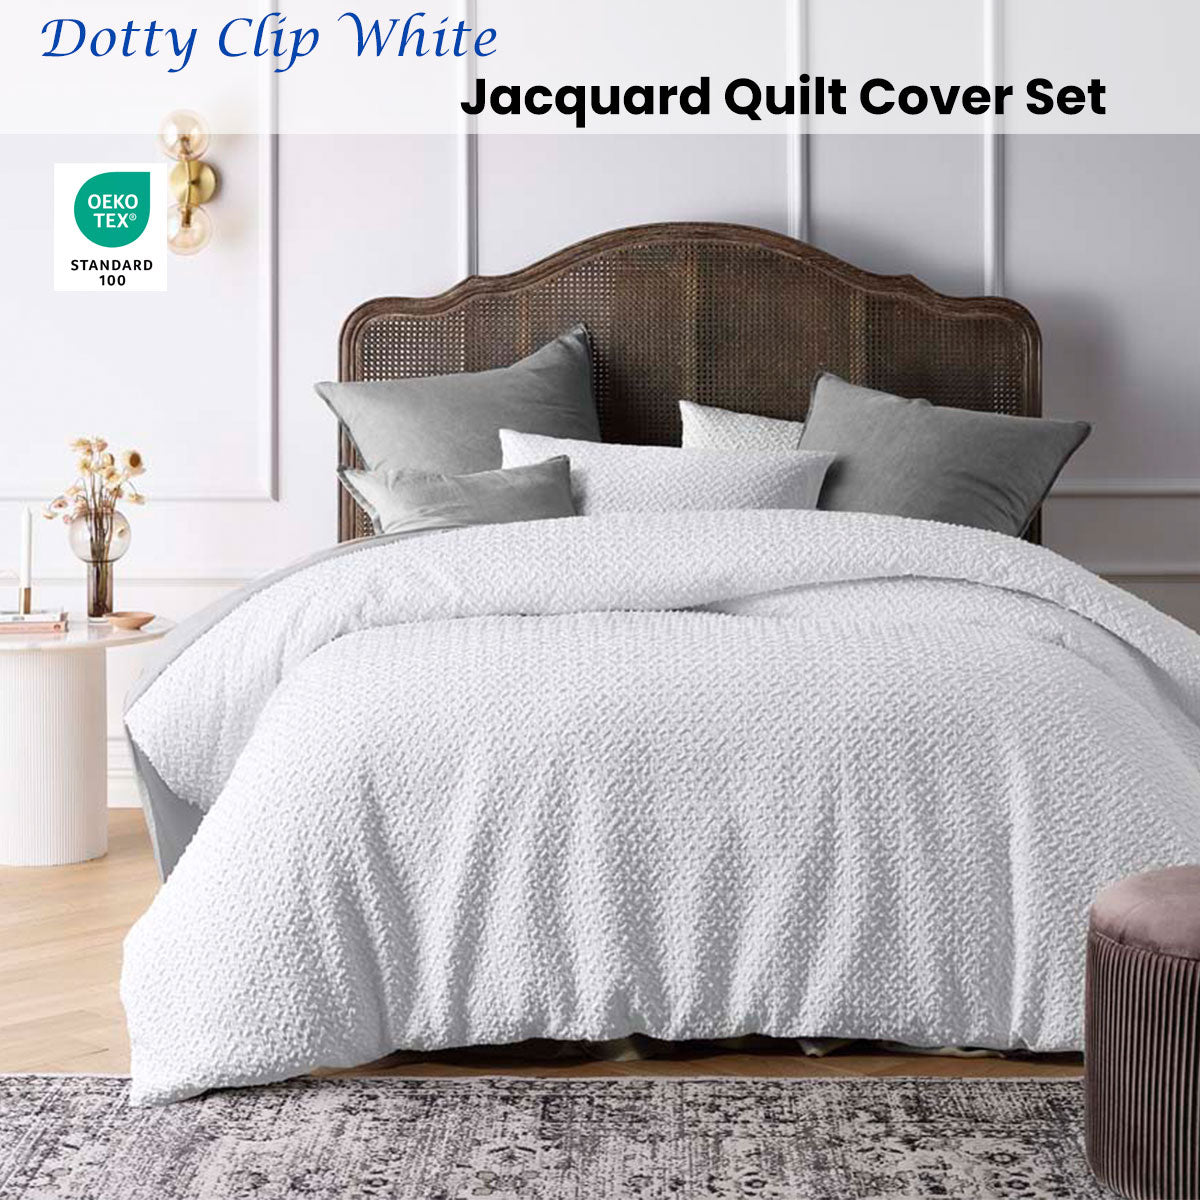 Dotty Clip White Jacquard Quilt Cover Set Queen